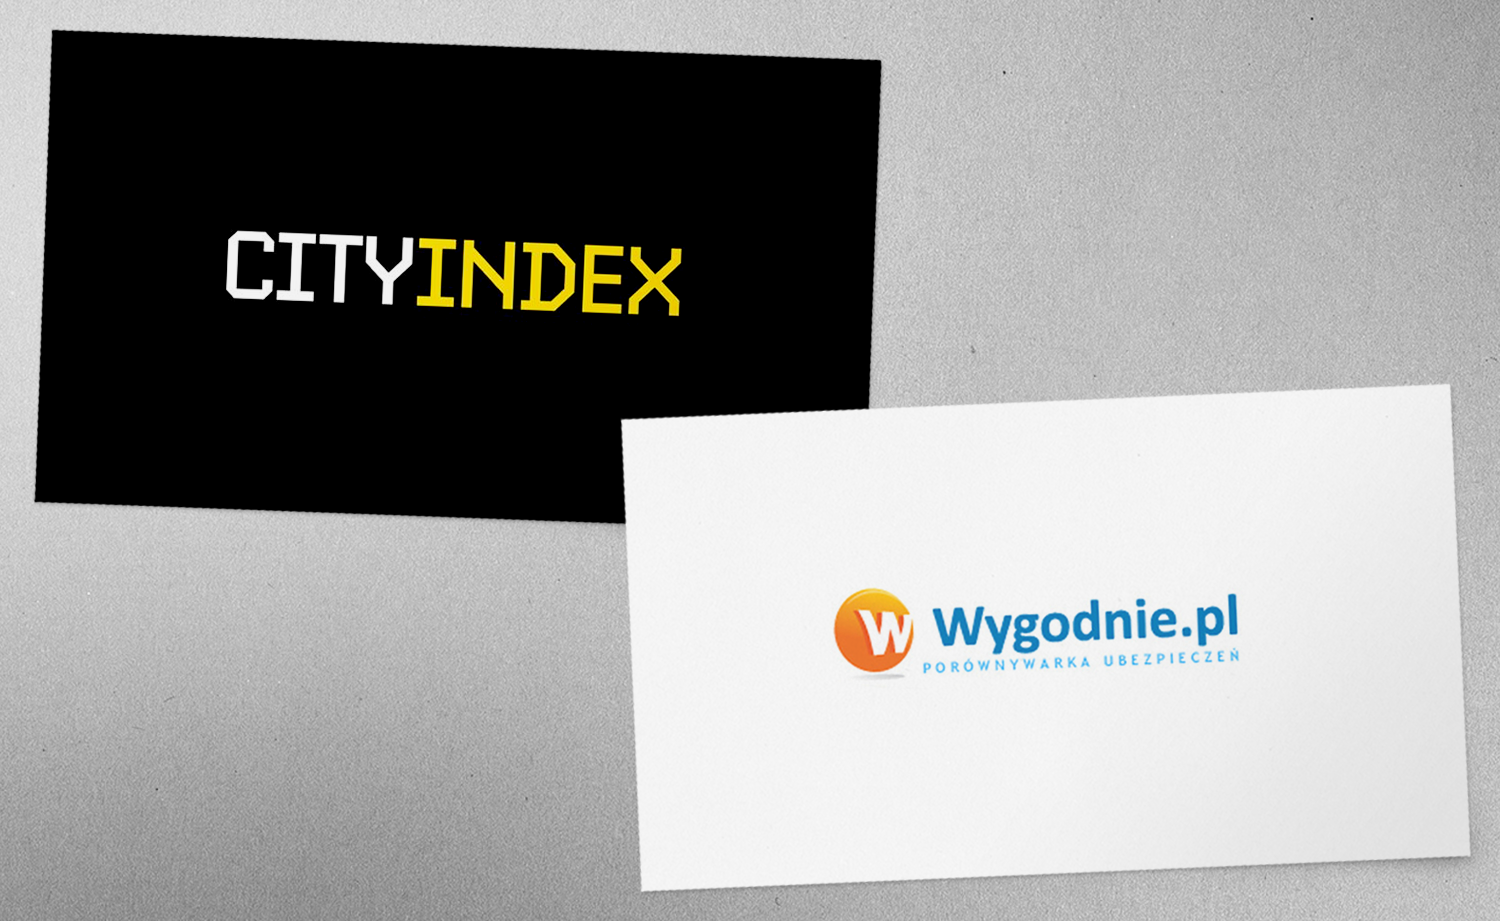 City Index and Wygodnie.pl start cooperation with BPR